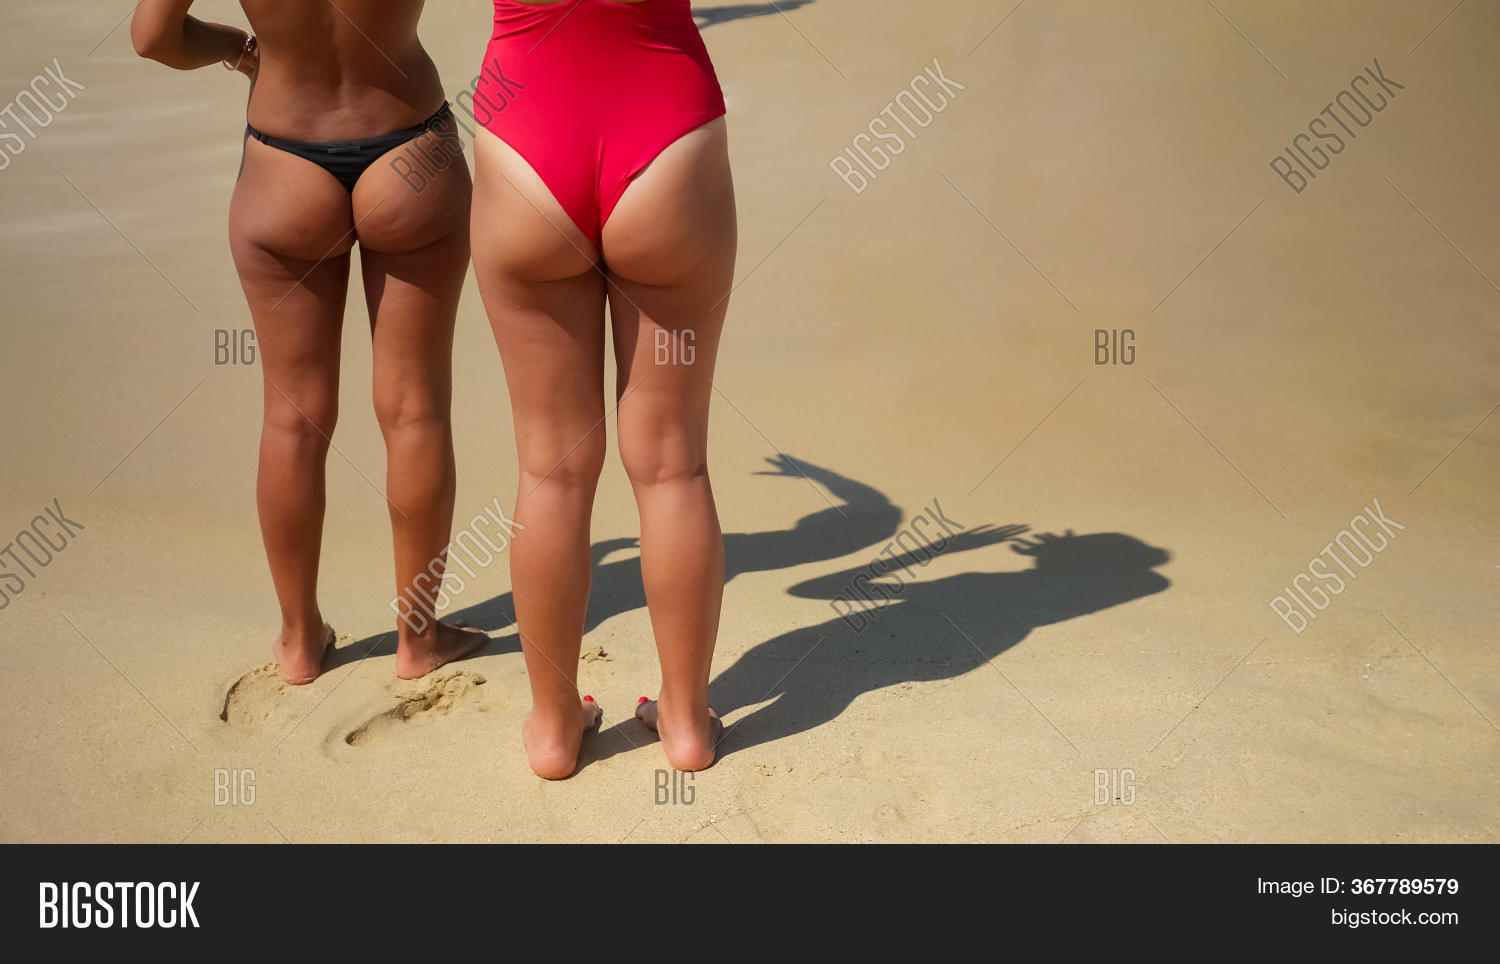 amanda jenkins martin share nice butts on girls photos